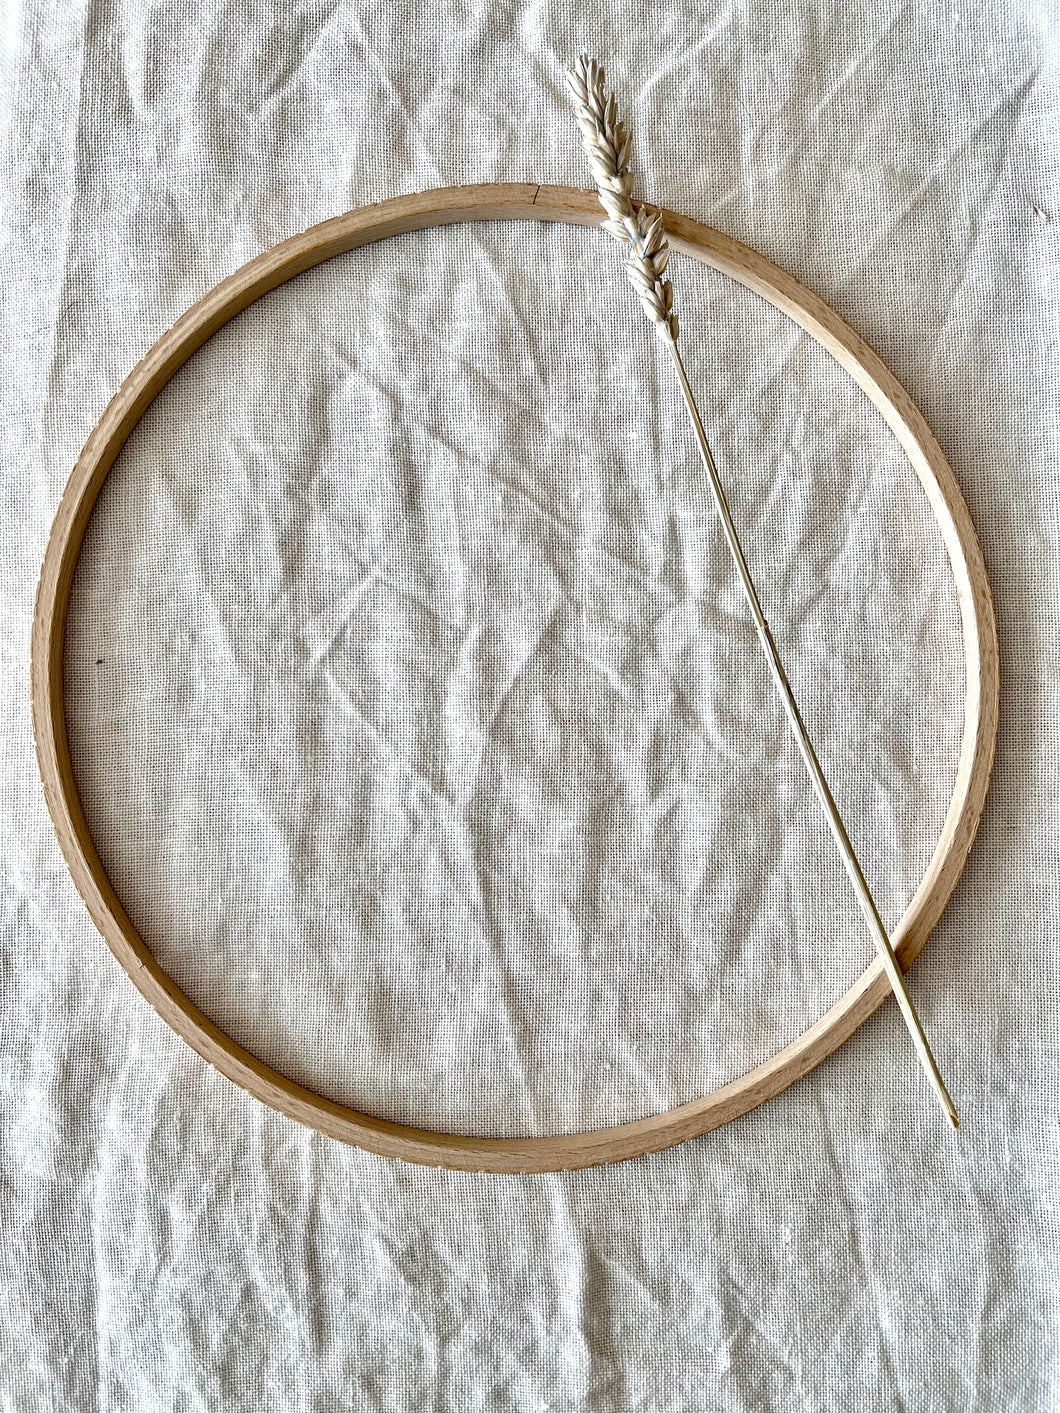 Circular Weaving Loom 11